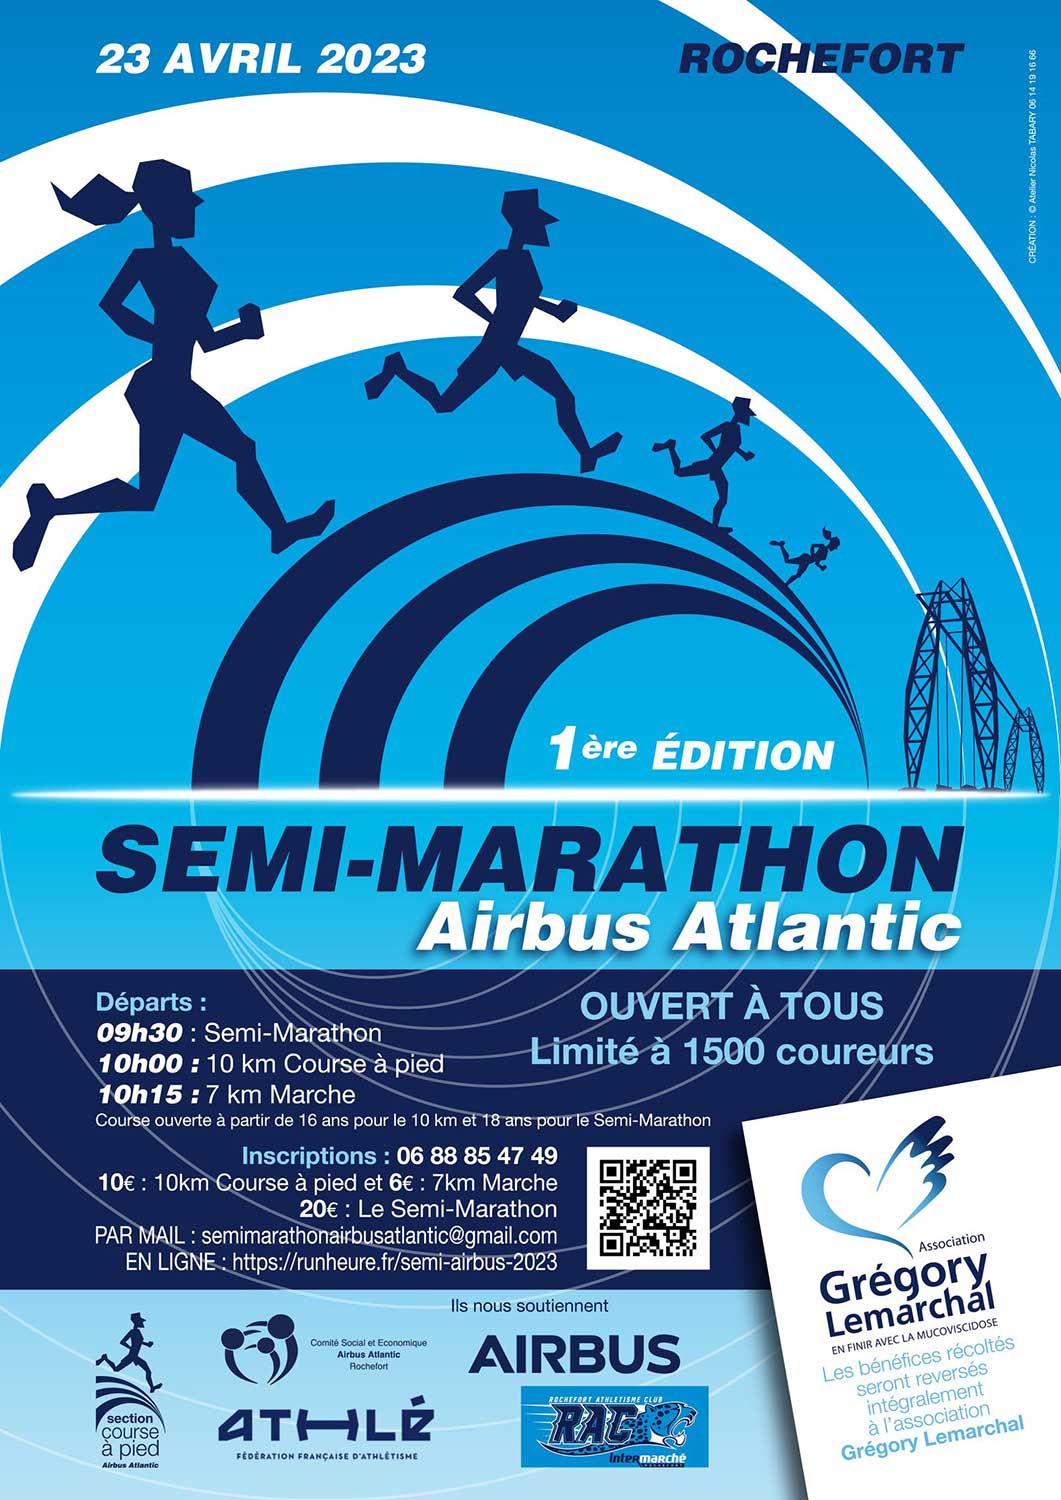 Affiche Semi-Marathon Airbus Atlantic 2023 à Rochefort 